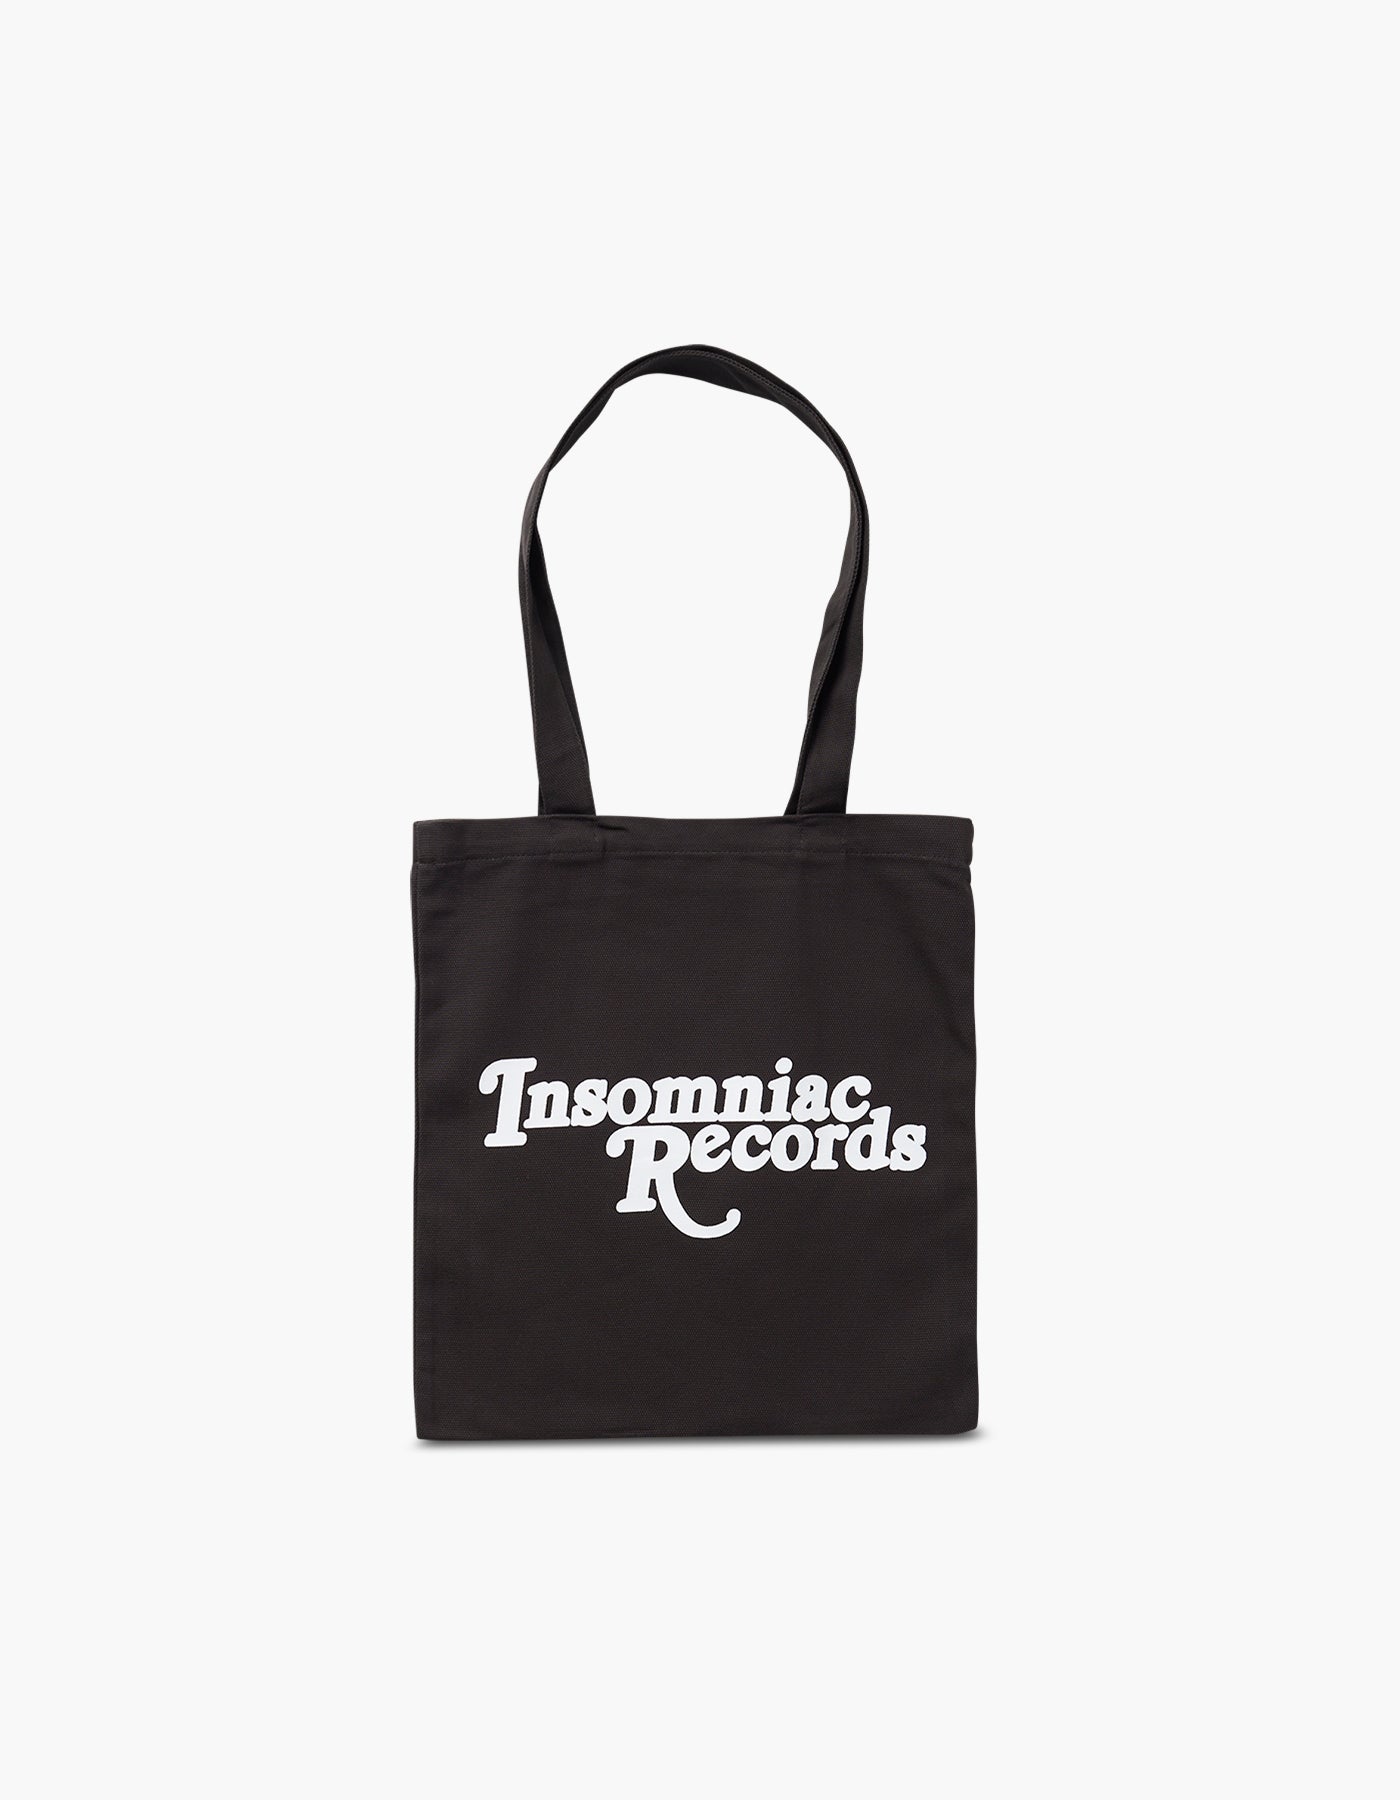 Insomniac Records Tote Bag